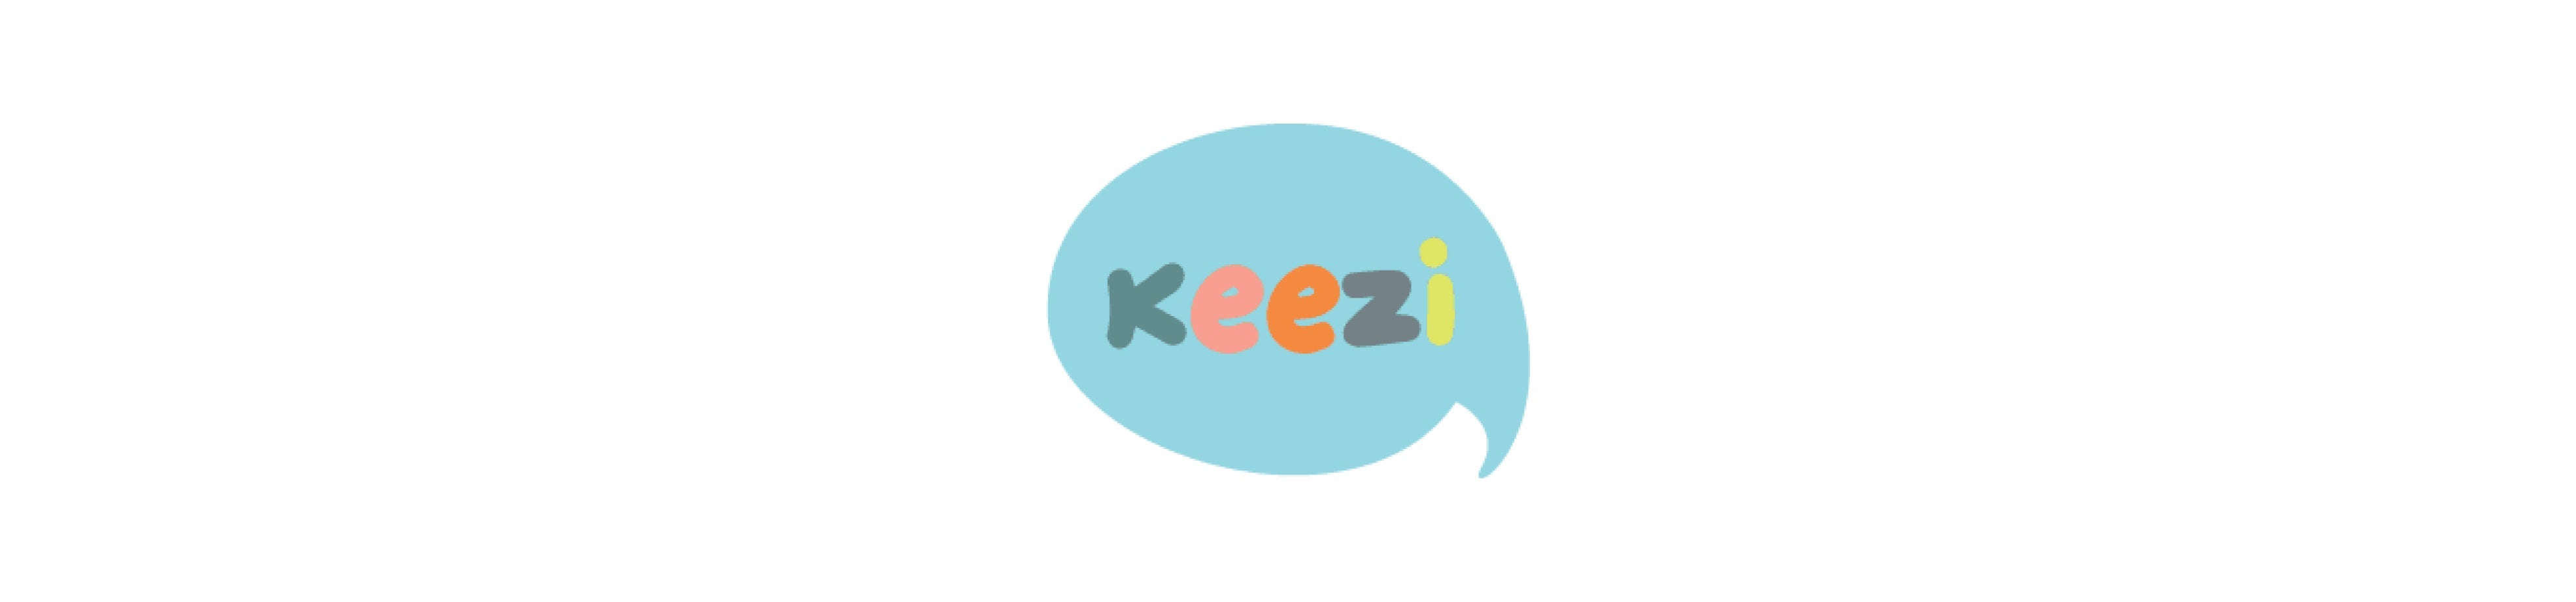 Keezi Kids Toys & Furniture - Fueling Imagination & Growth - Kids Mega Mart